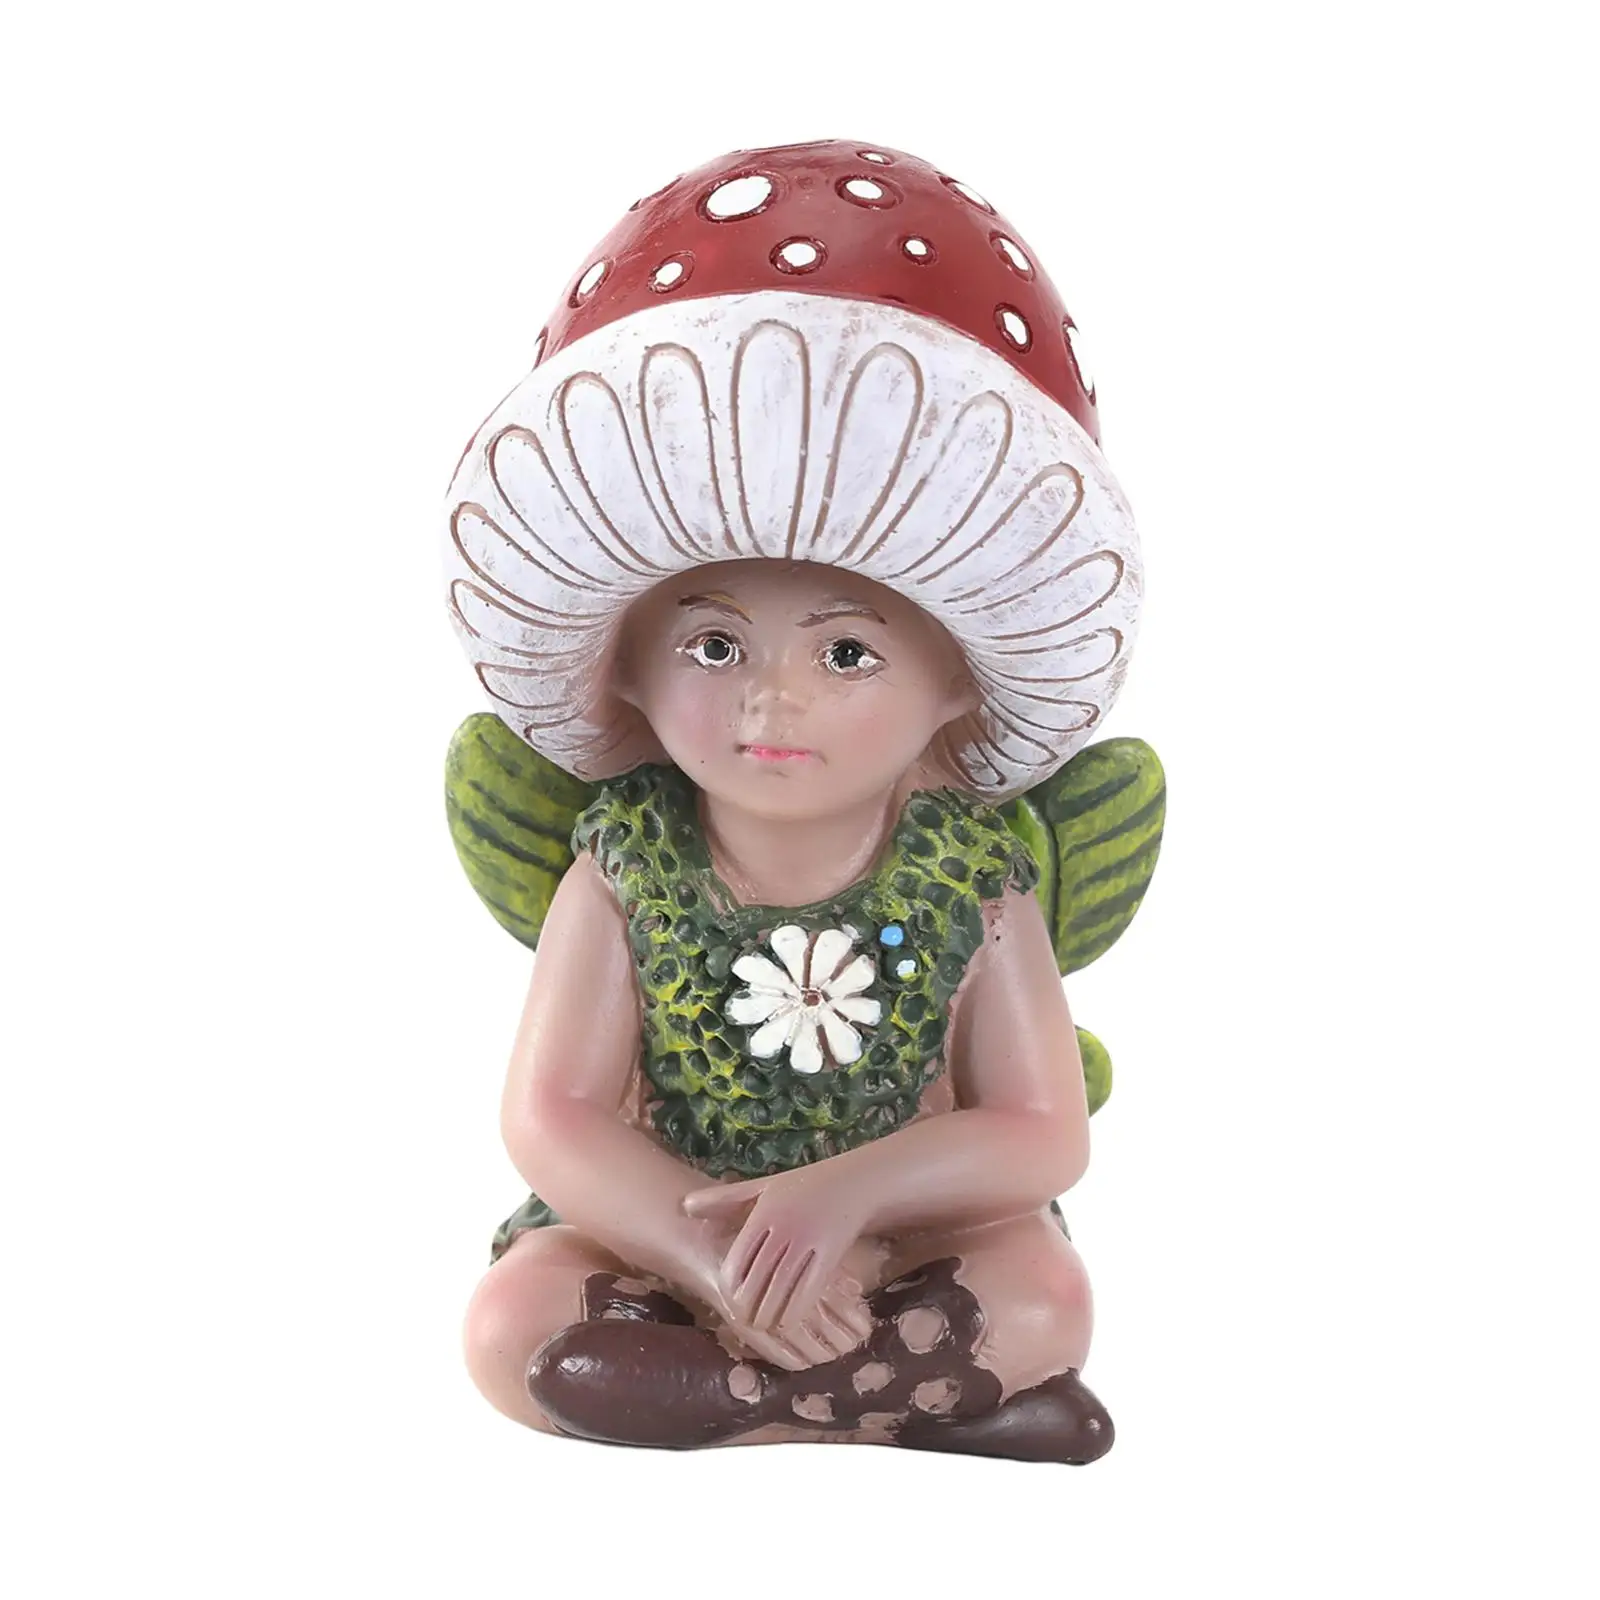 Mushroom Elf Boy Statue Ornament Table Display Decor for Balcony Party